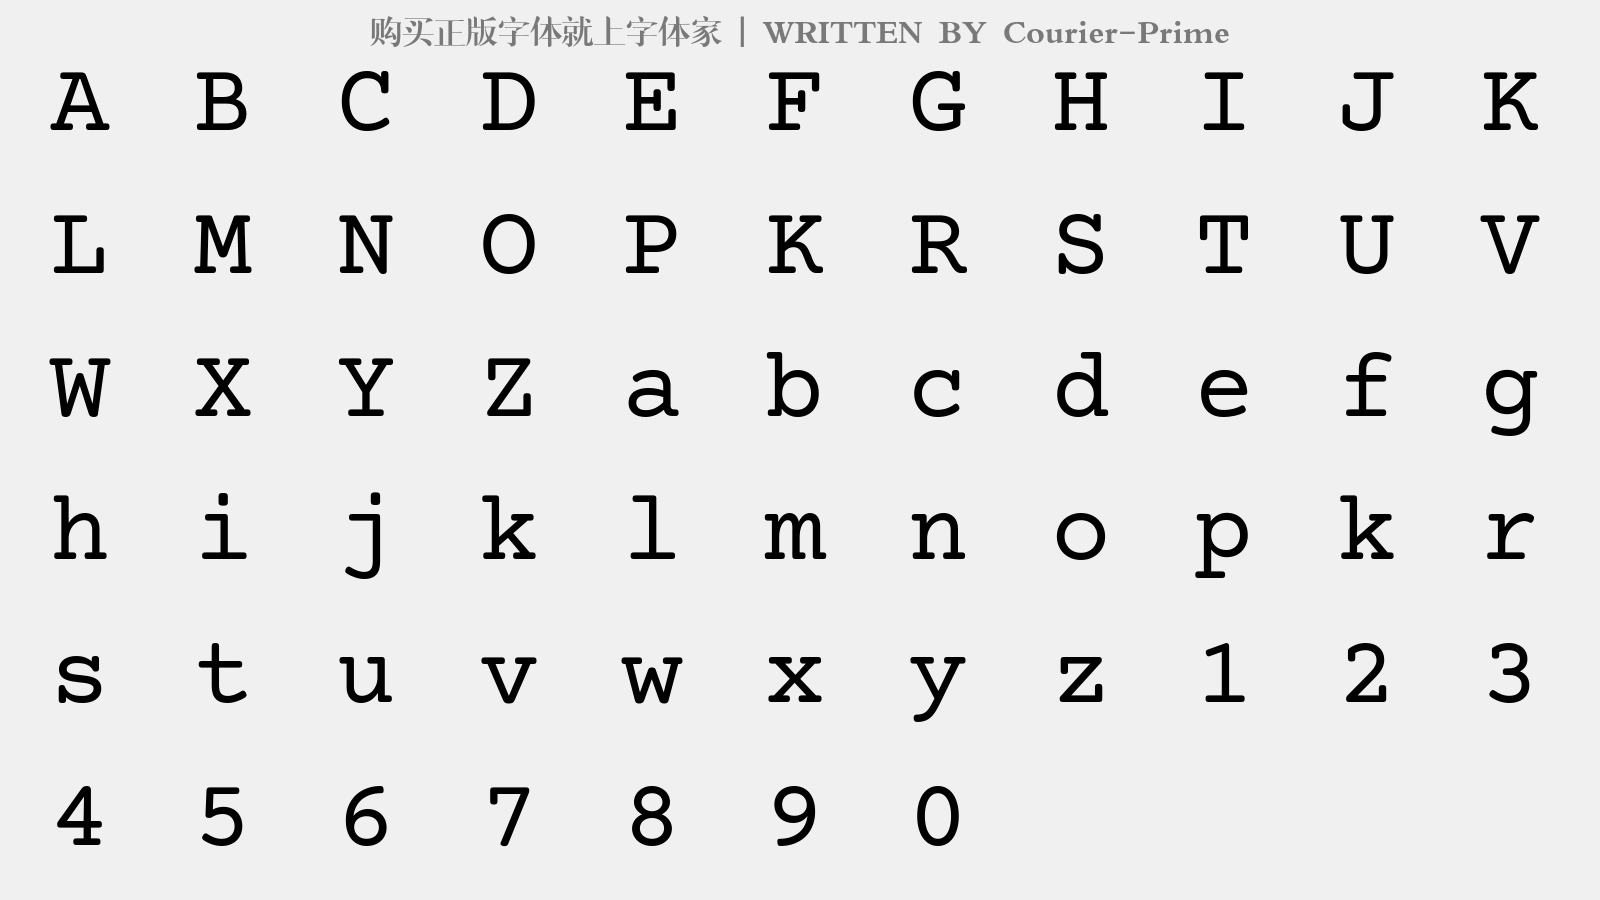 Courier-Prime - 大写字母/小写字母/数字